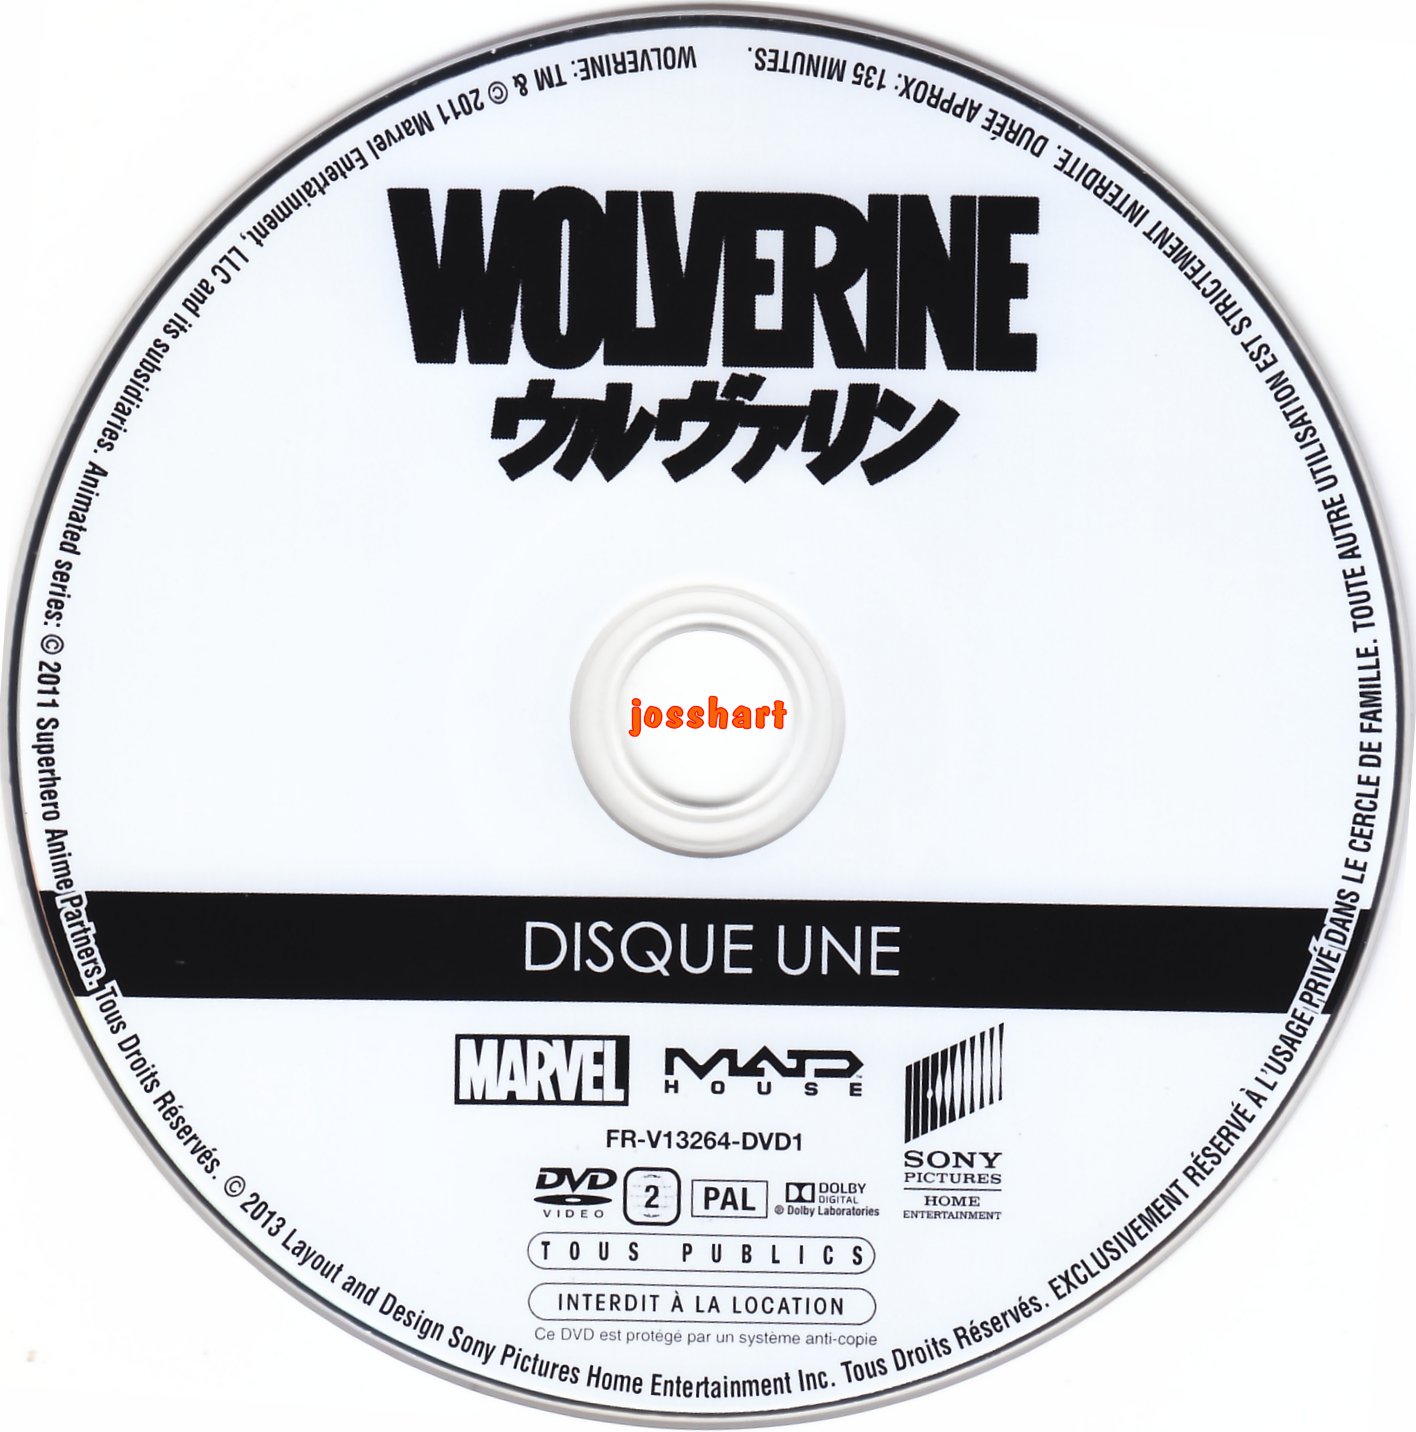 Wolverine la srie anime Disc 1